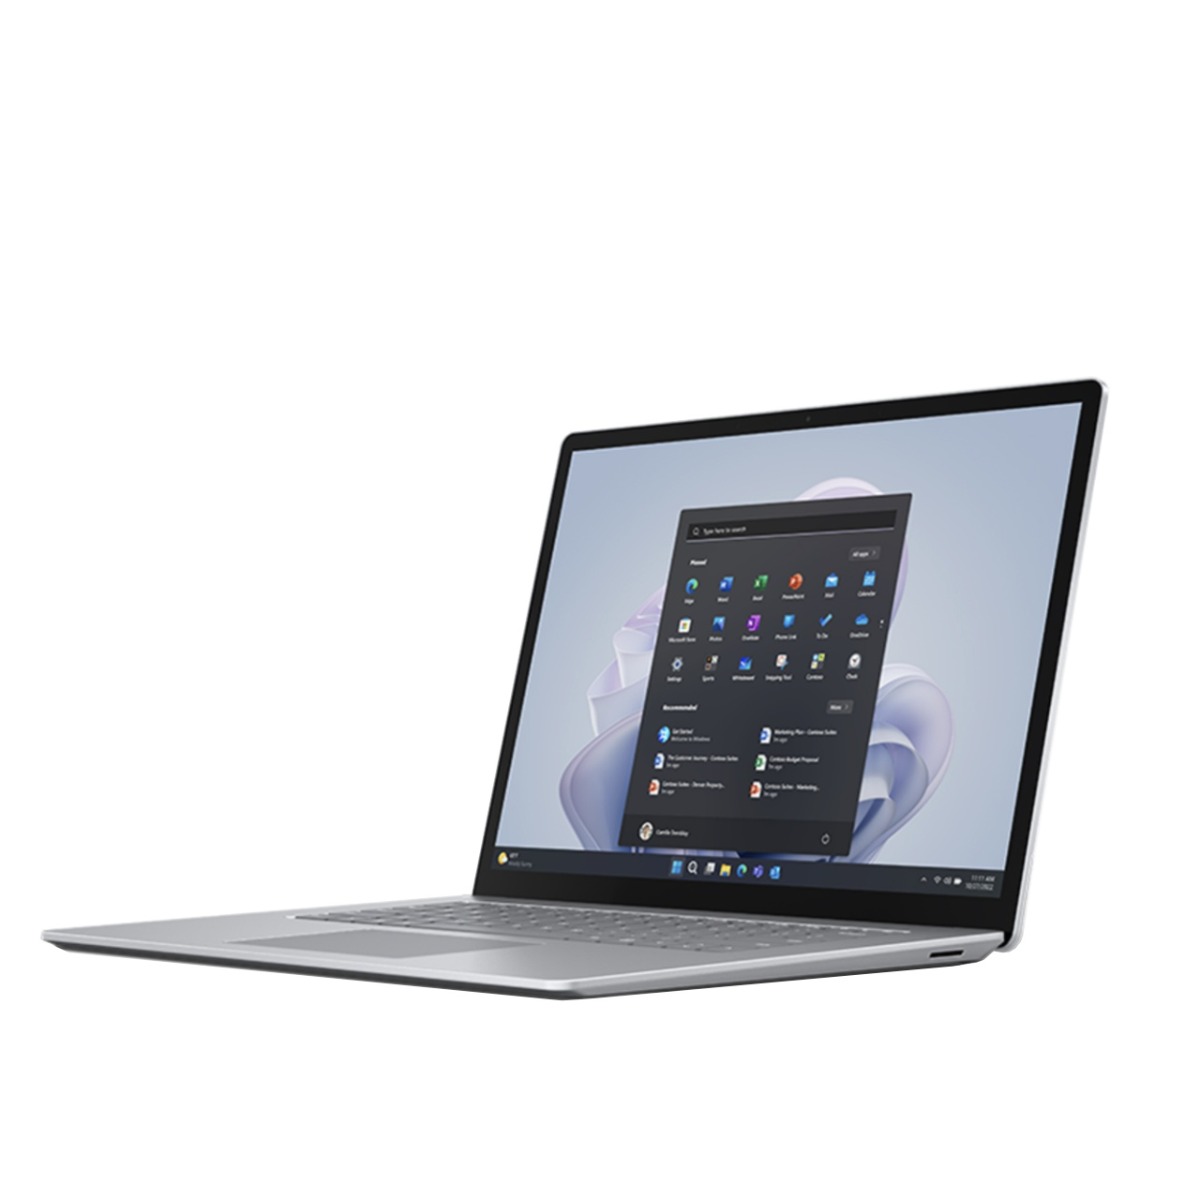 Surface laptop 5